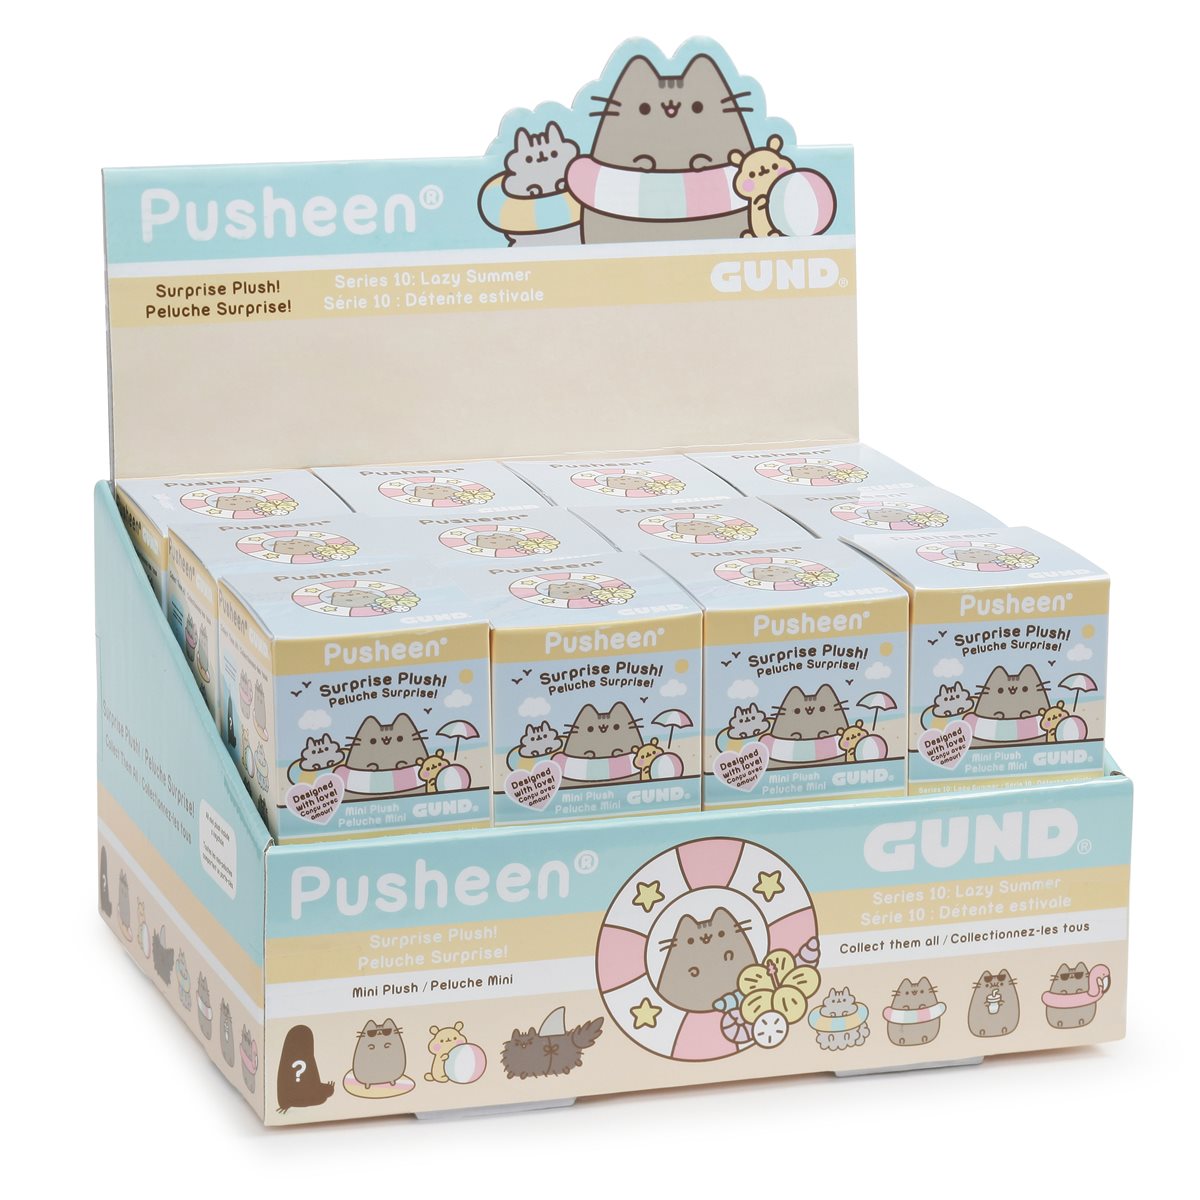 Pusheen the Cat Blind Box Series 10 Plush